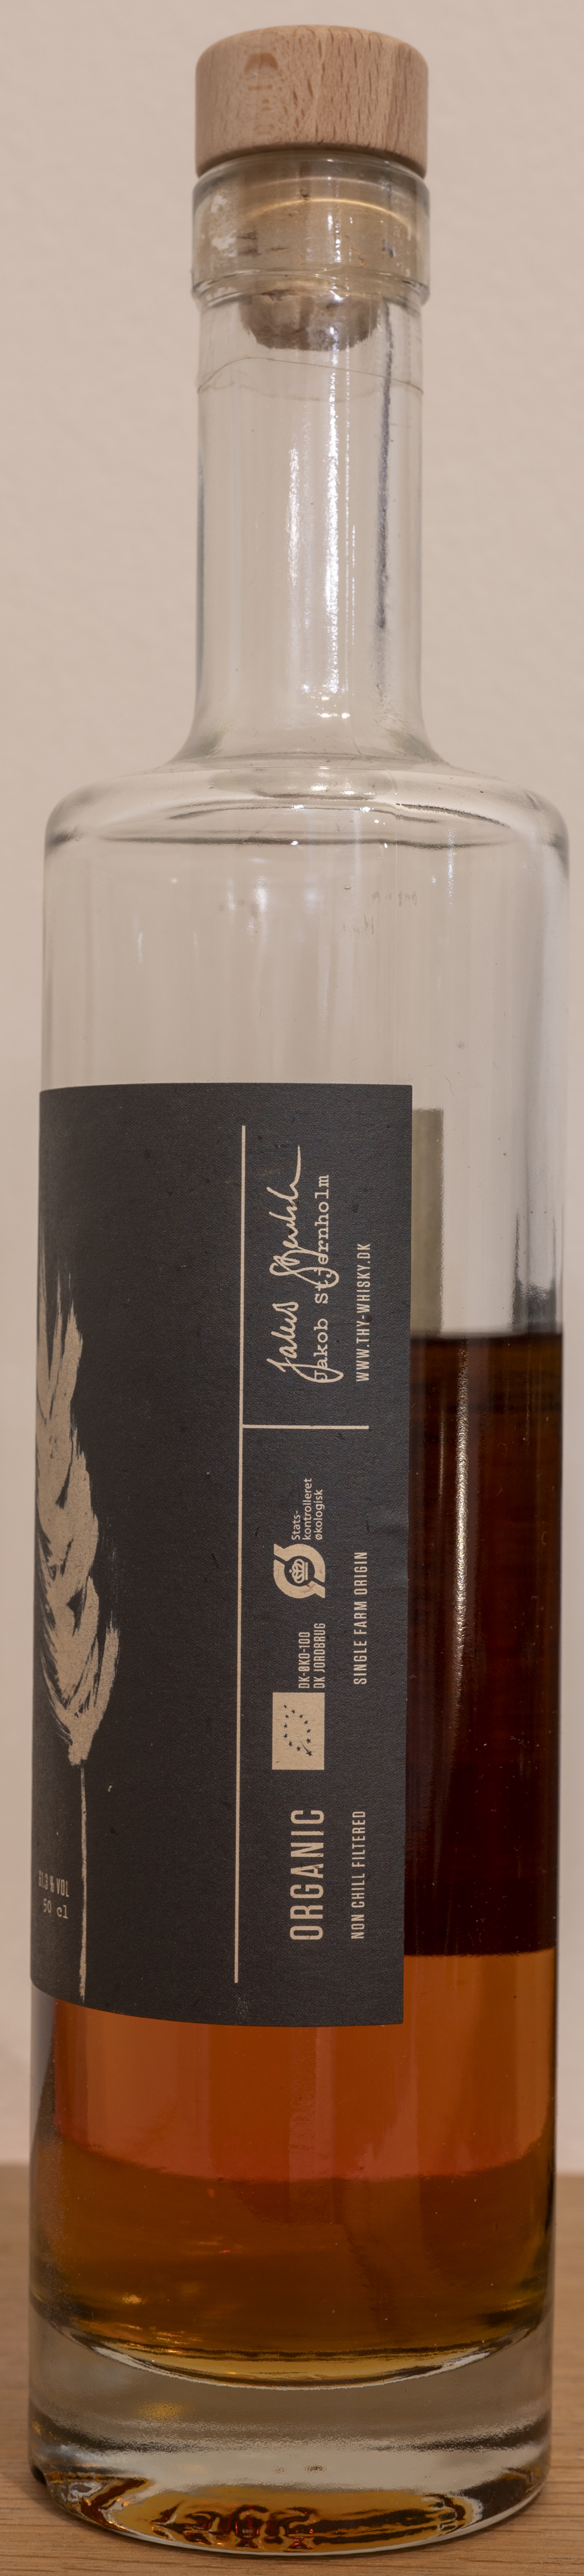 Billede: Z62_7293 - Thy Whisky Shared cask 356 - bottle side.jpg